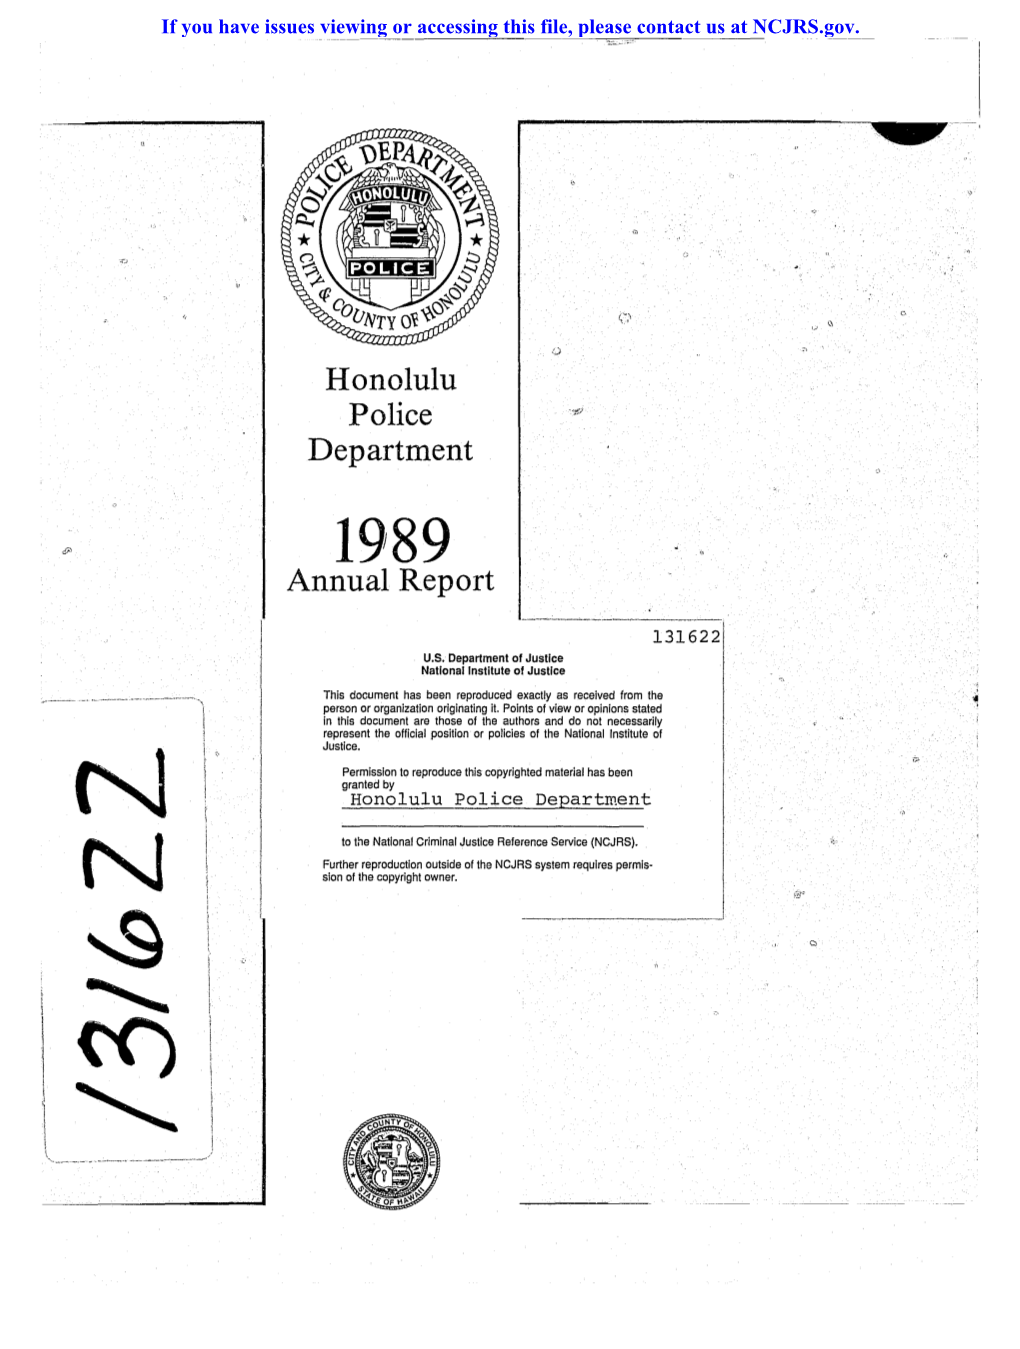 Honolulu Police Department Annual Report